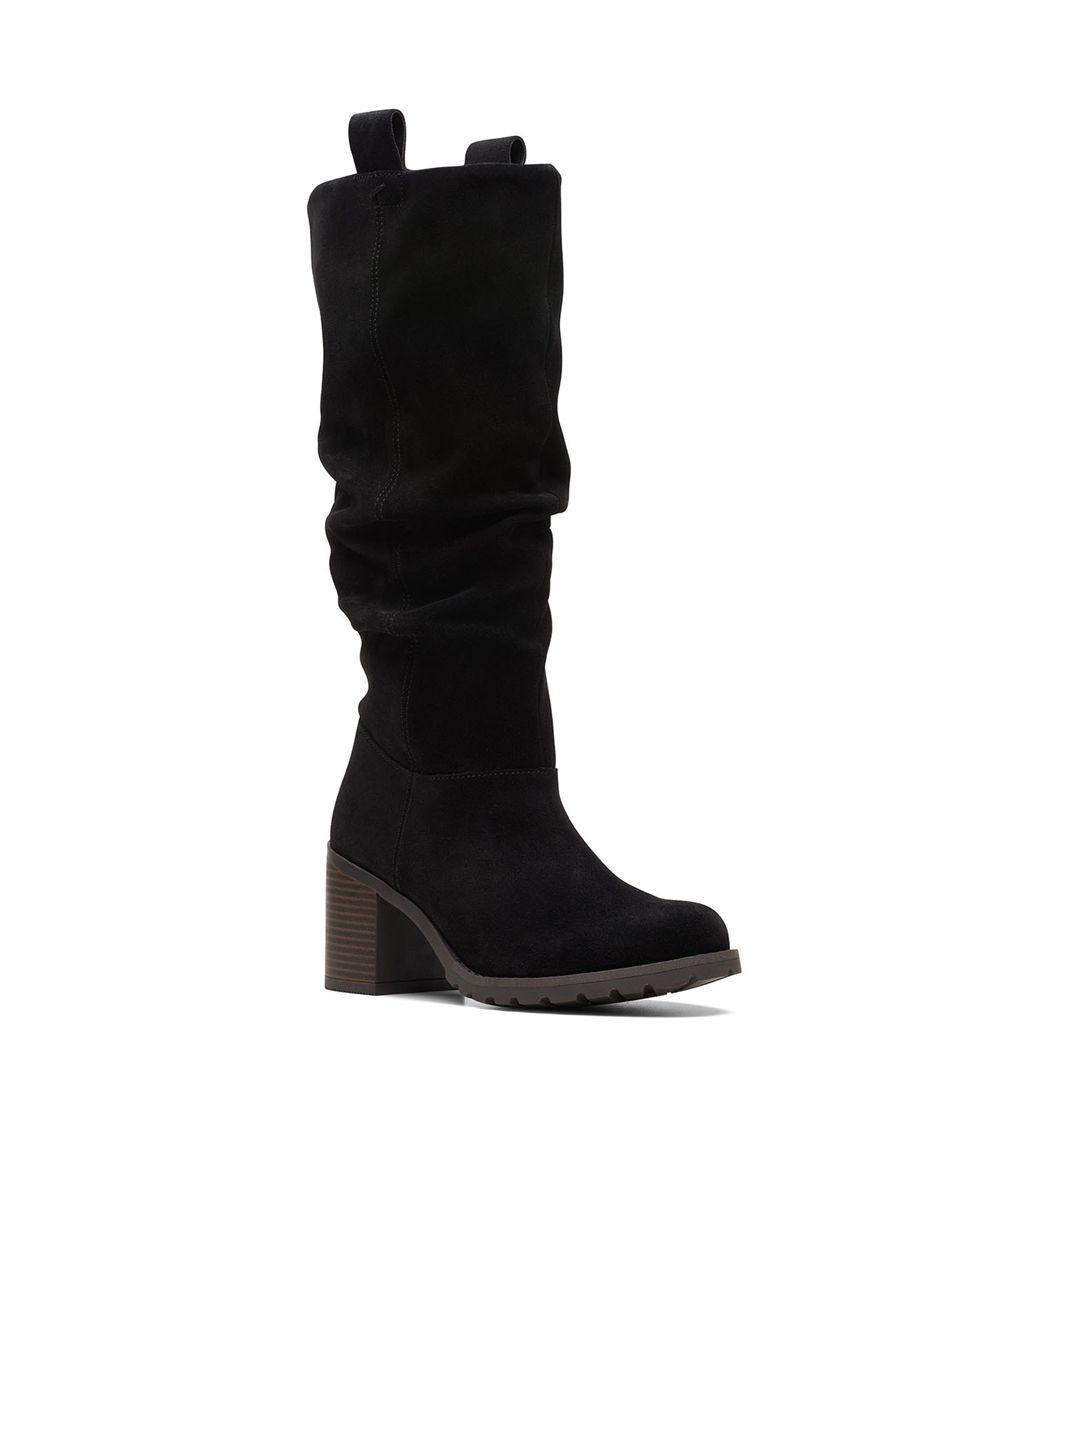 clarks-women-black-solid-desert-boots